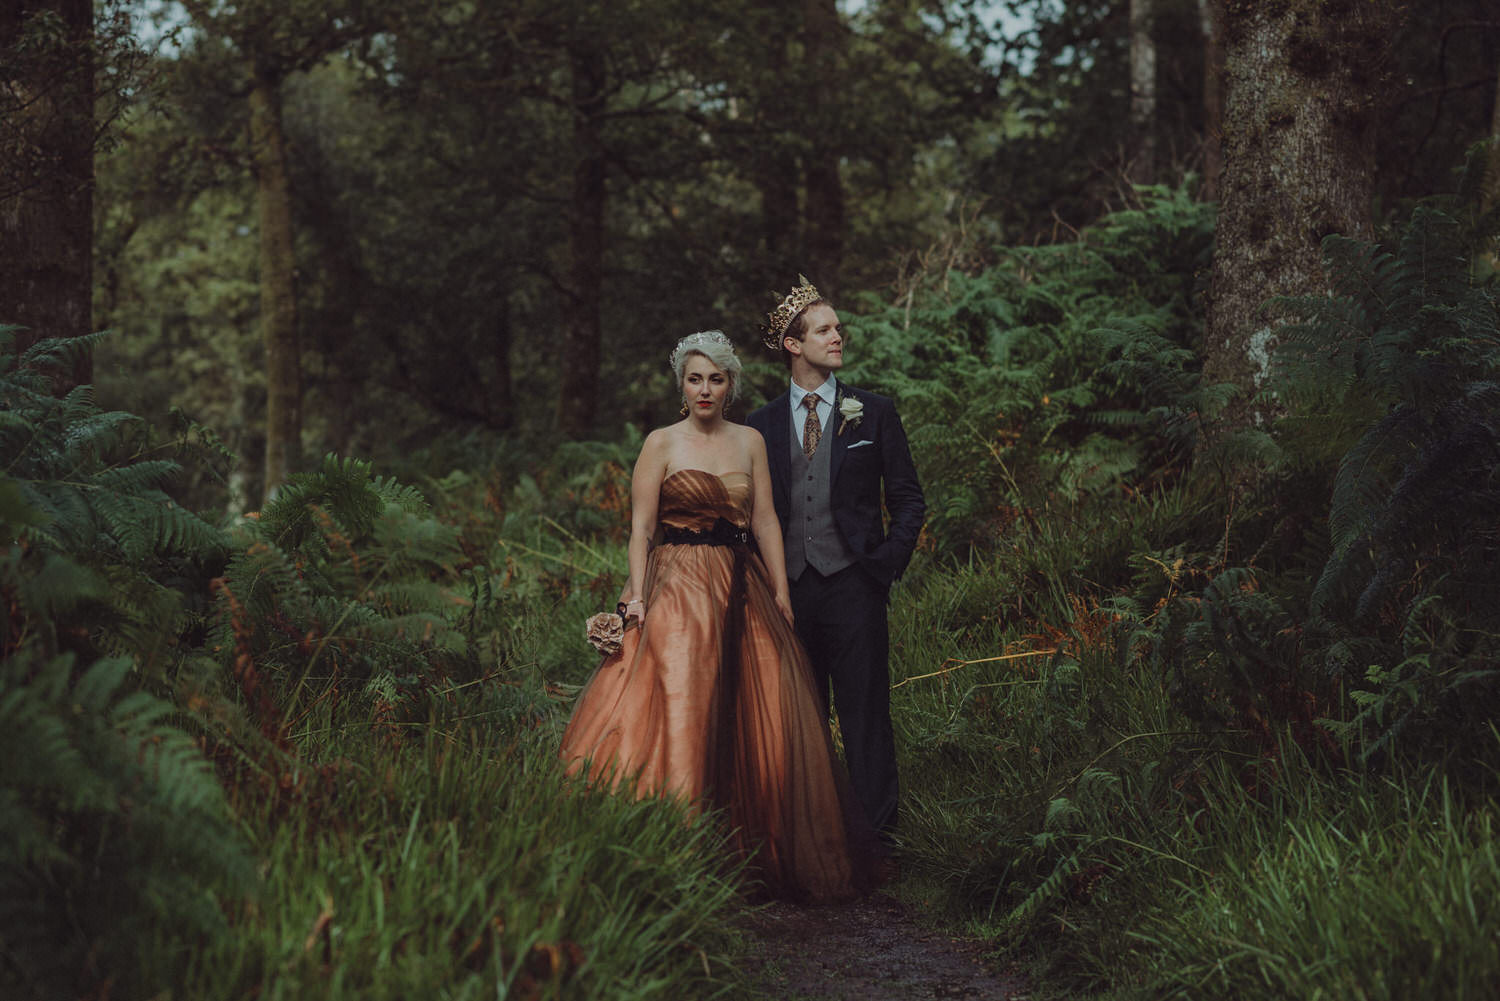  David & Victoria's wedding on Inchcailloch island, Loch Lomond and at One Devonshire Gardens in Glasgow, Scotland in autumn 2015 